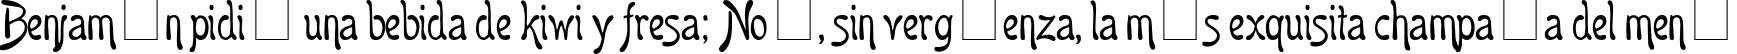 Пример написания шрифтом Favorit текста на испанском